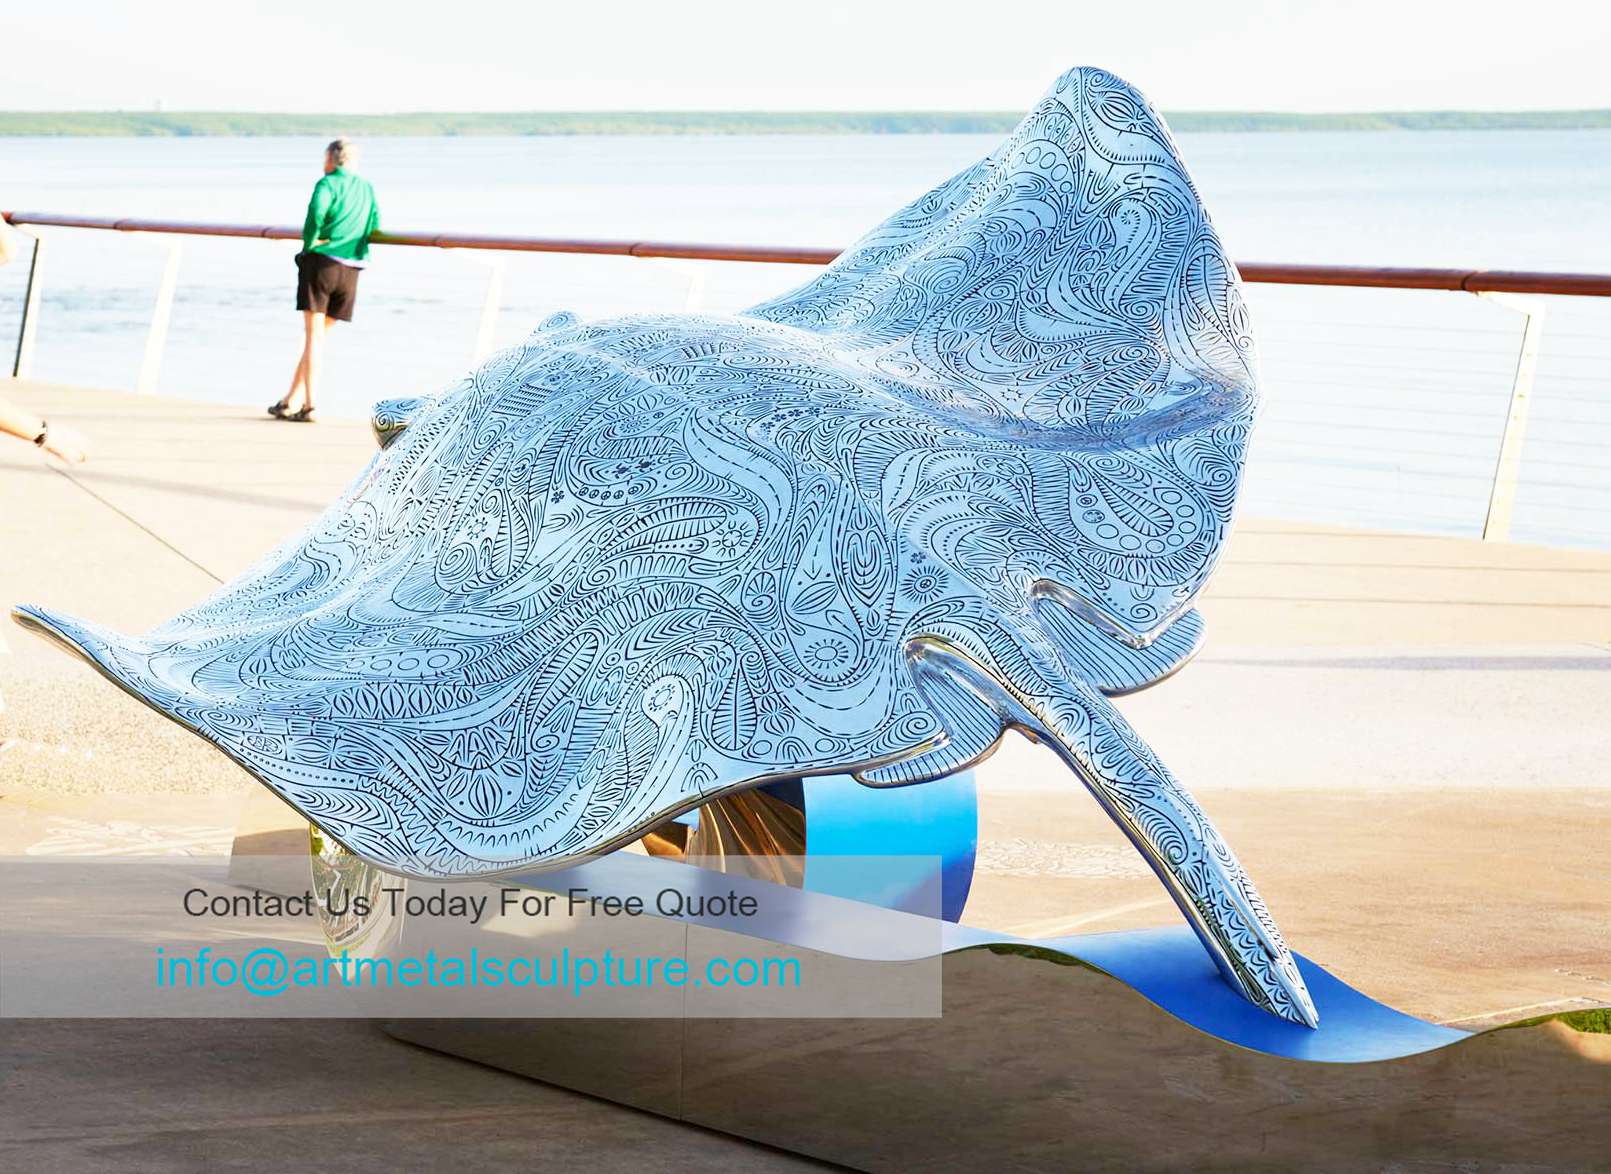 Cuttlefish stainless steel sculpture